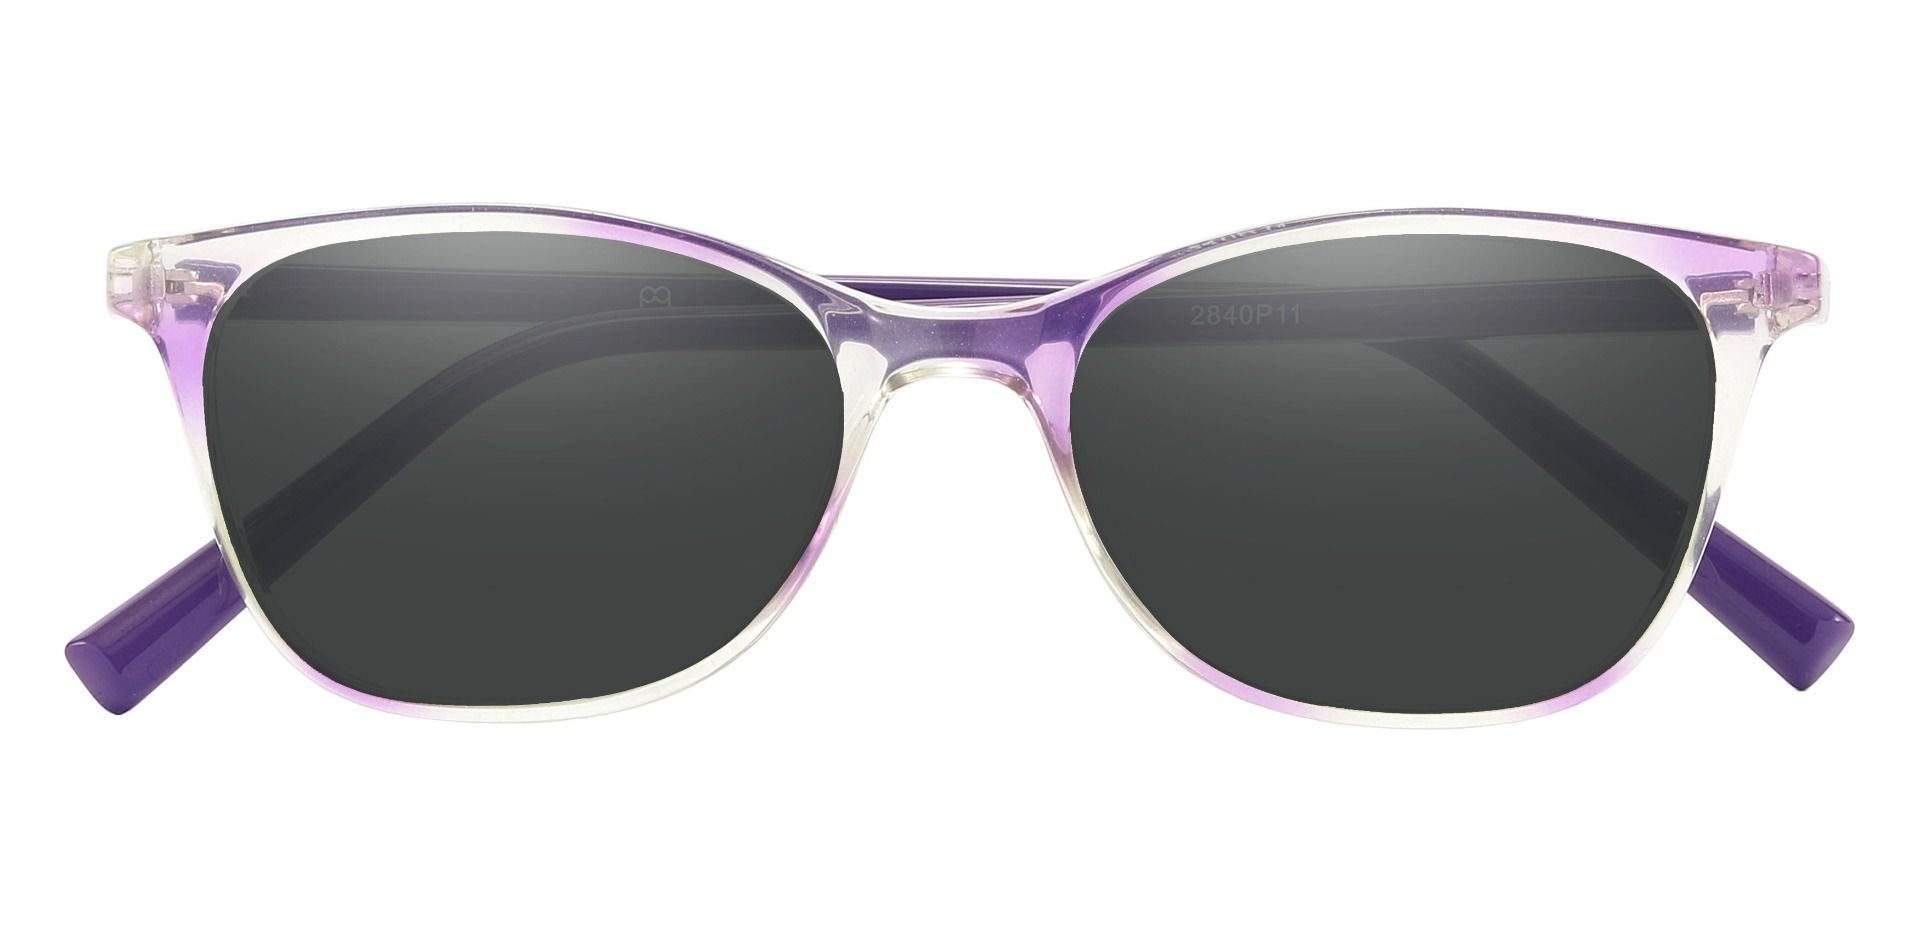 Bravo Rectangle Prescription Sunglasses - Purple Frame With Gray Lenses